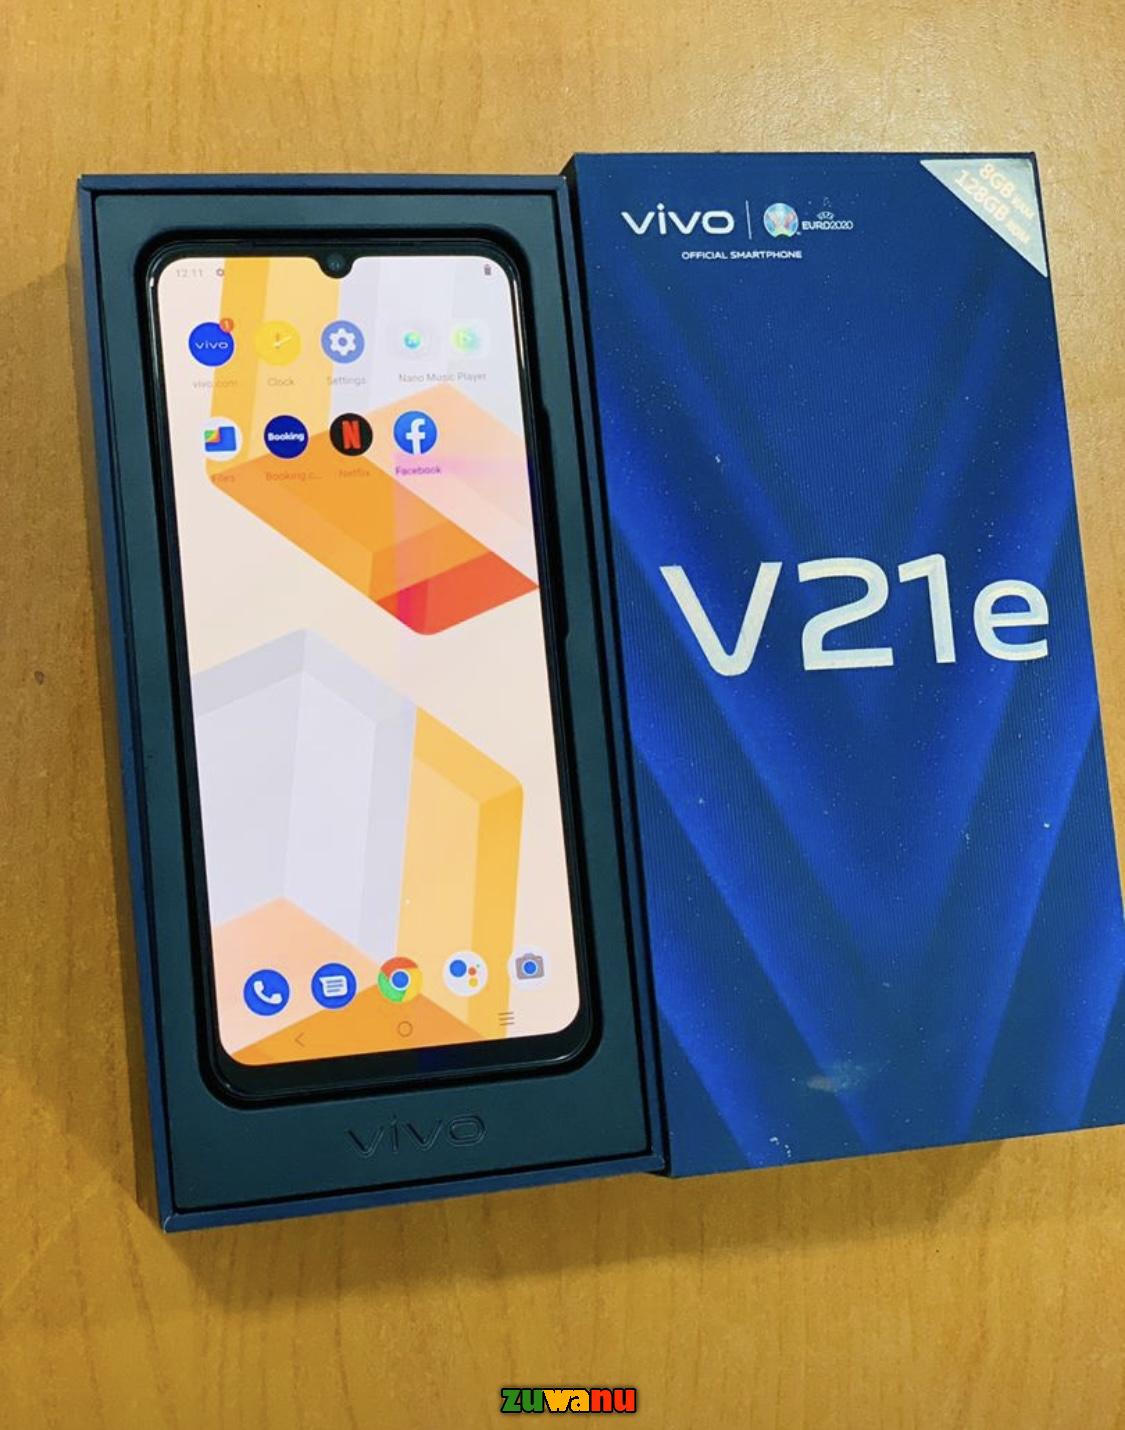 Vivo V21e 4G price